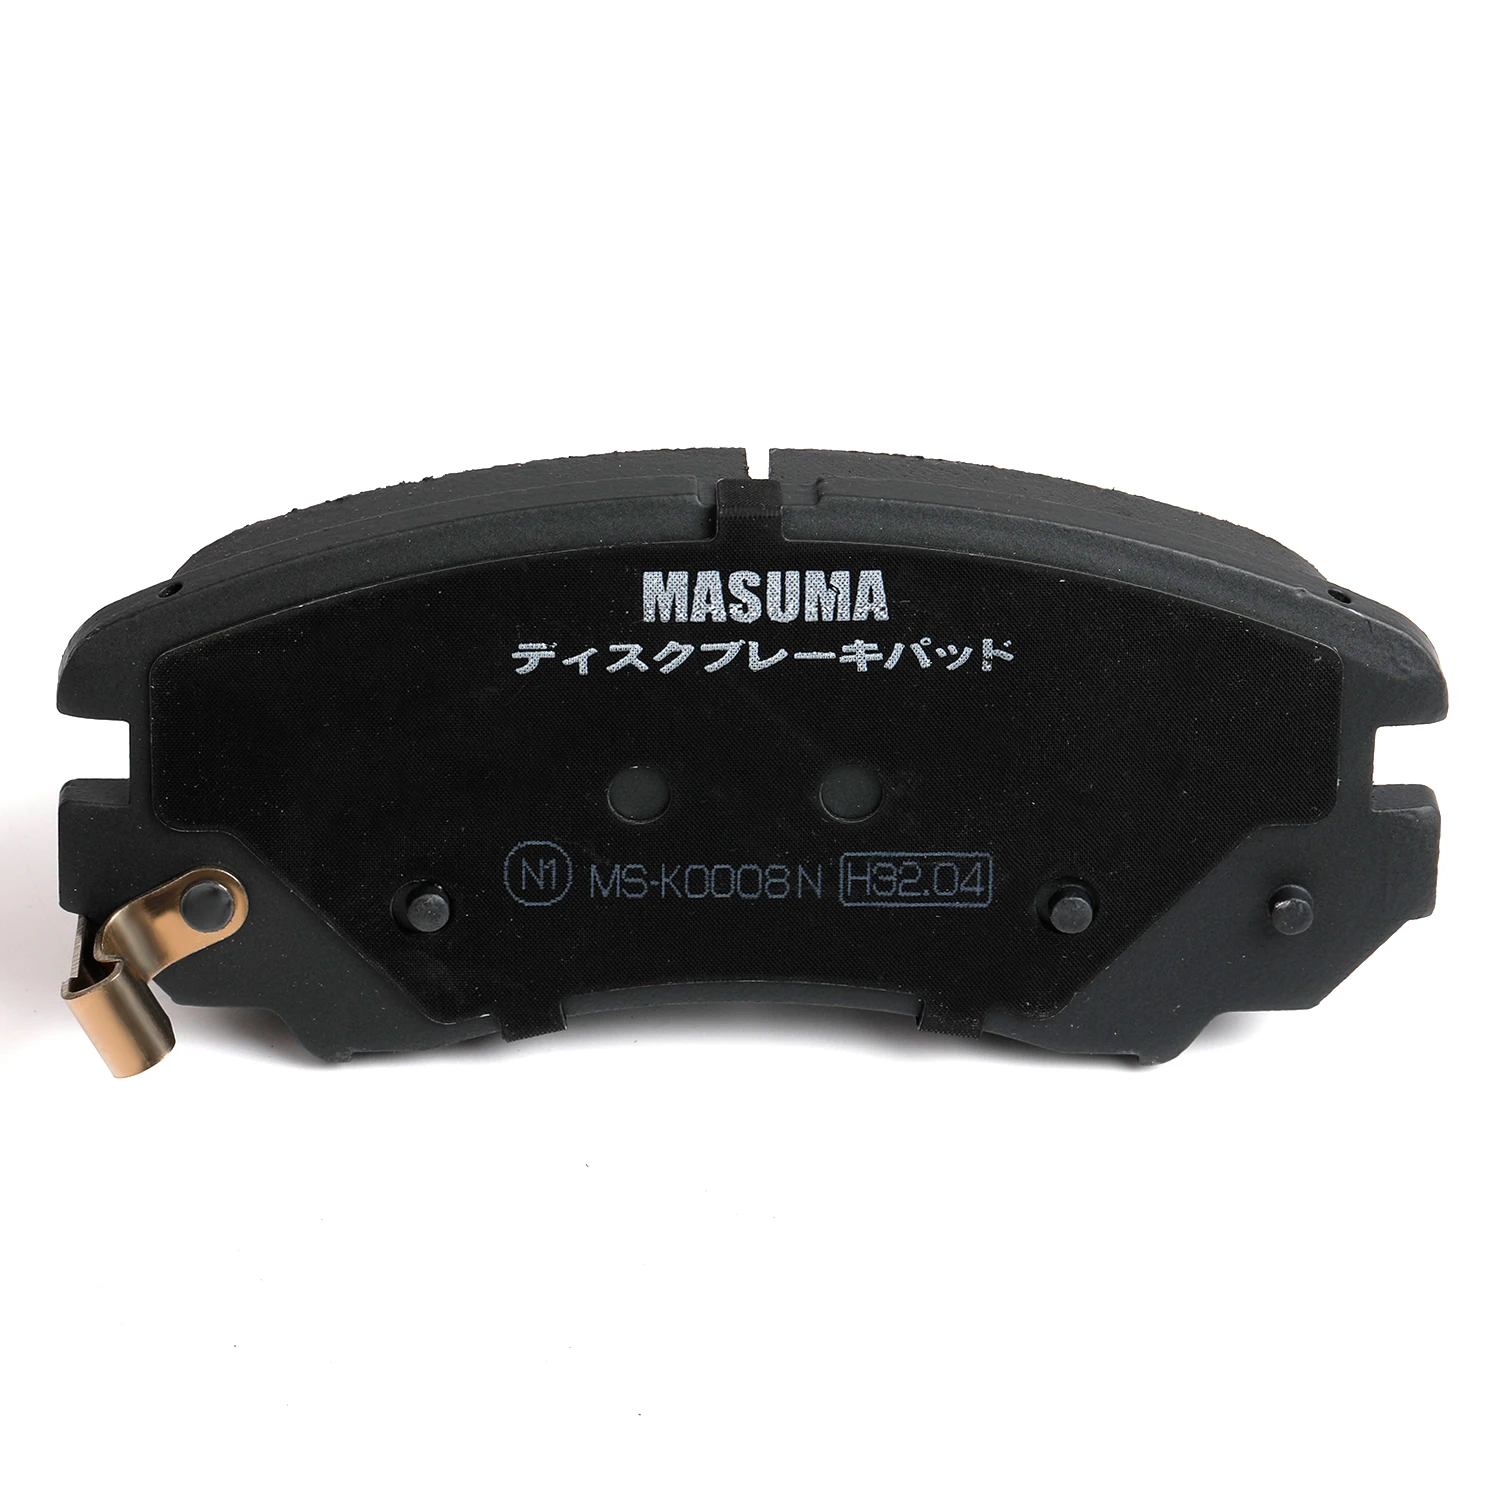 Source MS-K0008N MASUMA brand Auto spare parts accessories set 